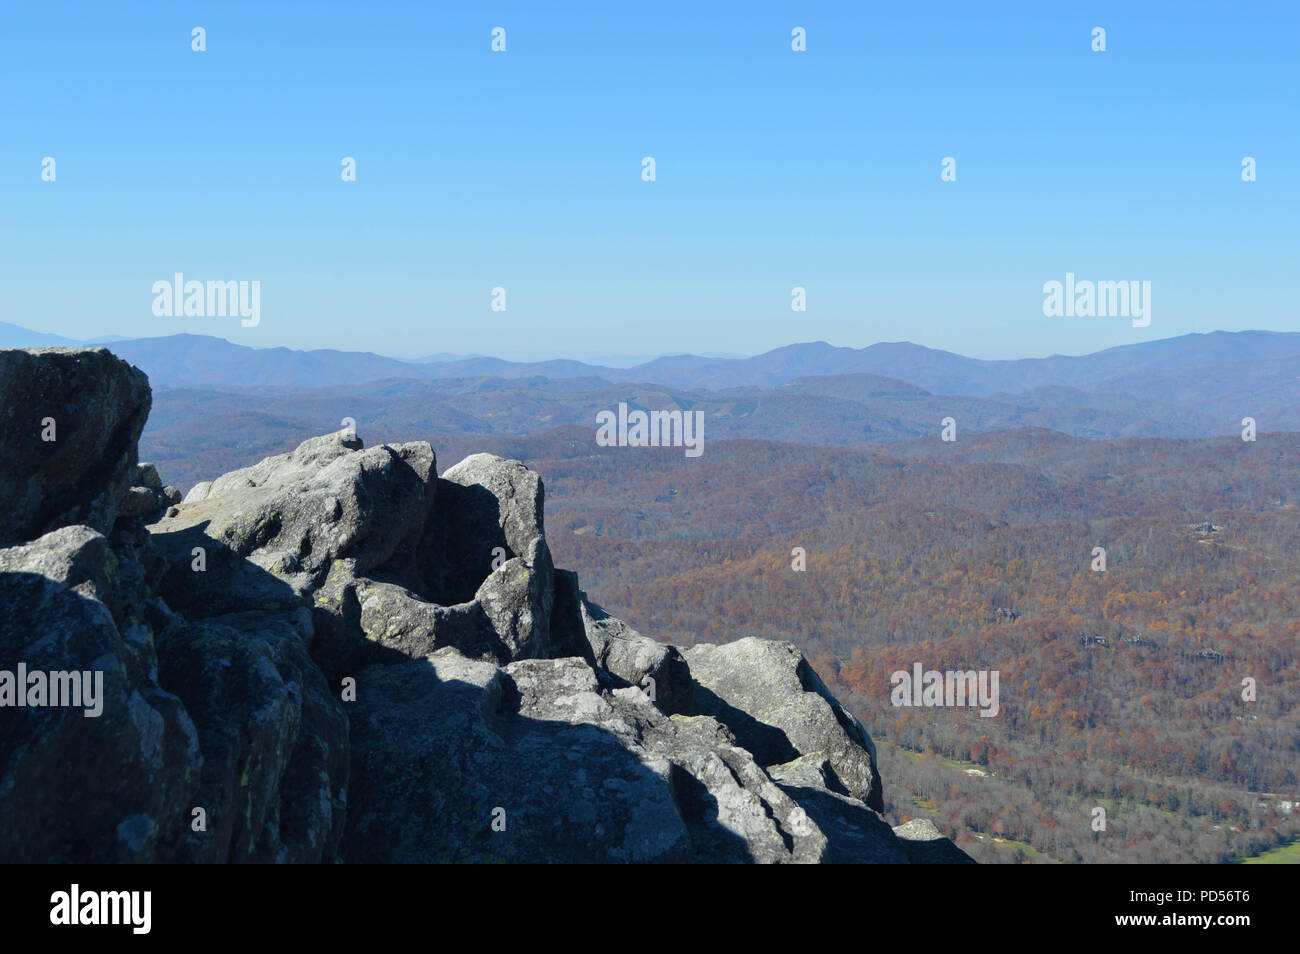 Rugged Boulders Overlook Dynamic Mountain Range. Stock Photo